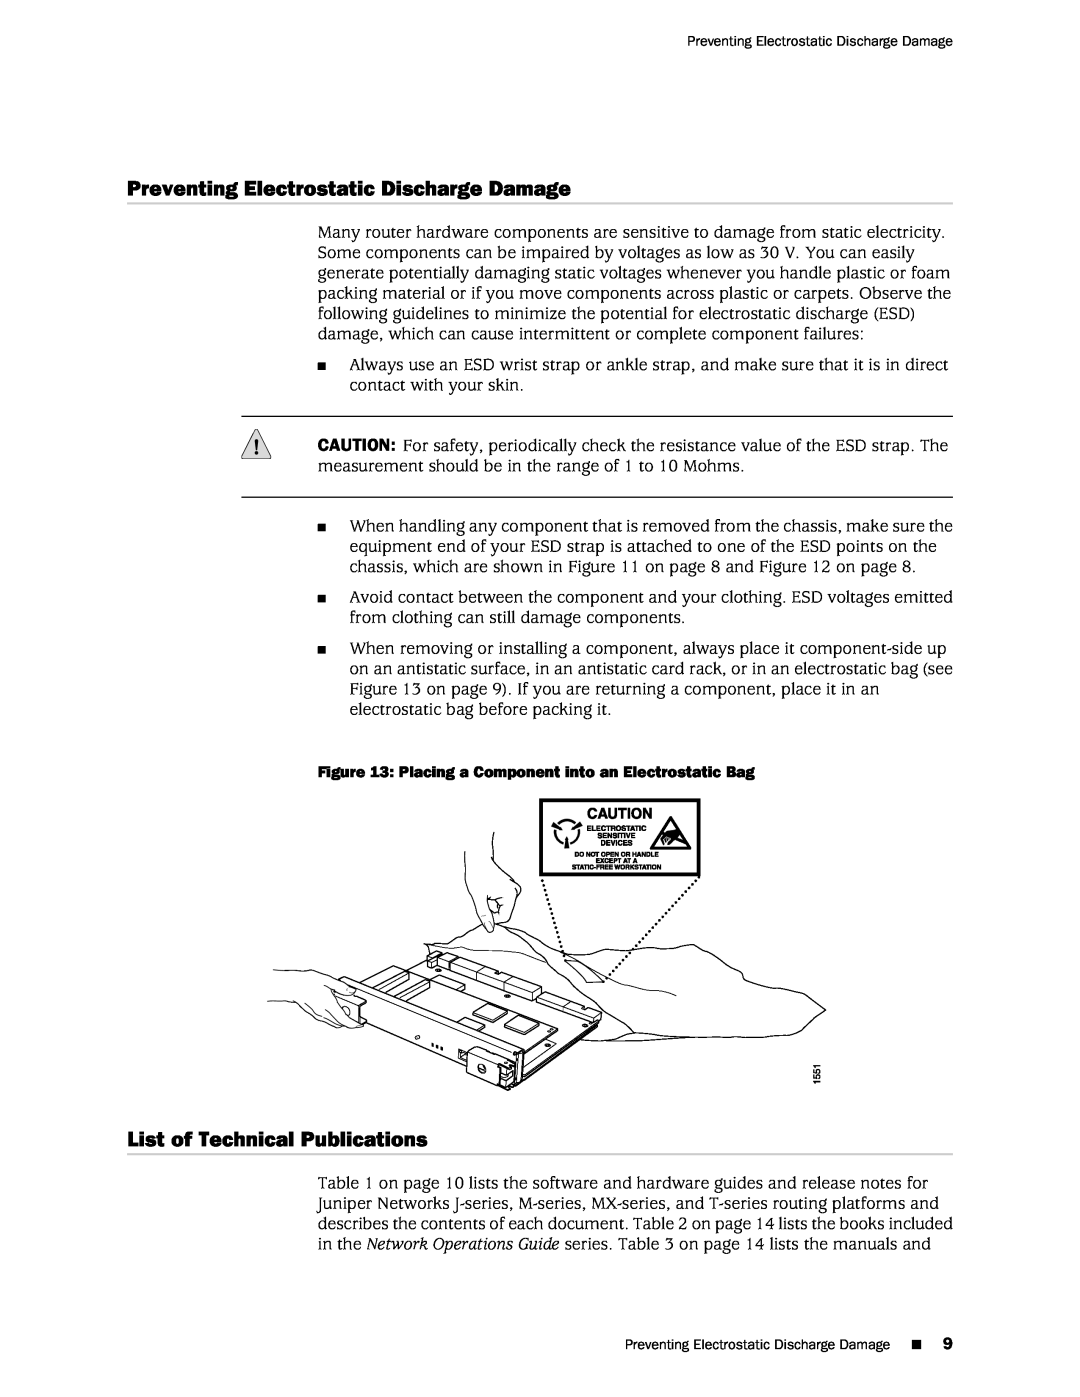 Juniper Networks MX480, MX240 Preventing Electrostatic Discharge Damage, List of Technical Publications 